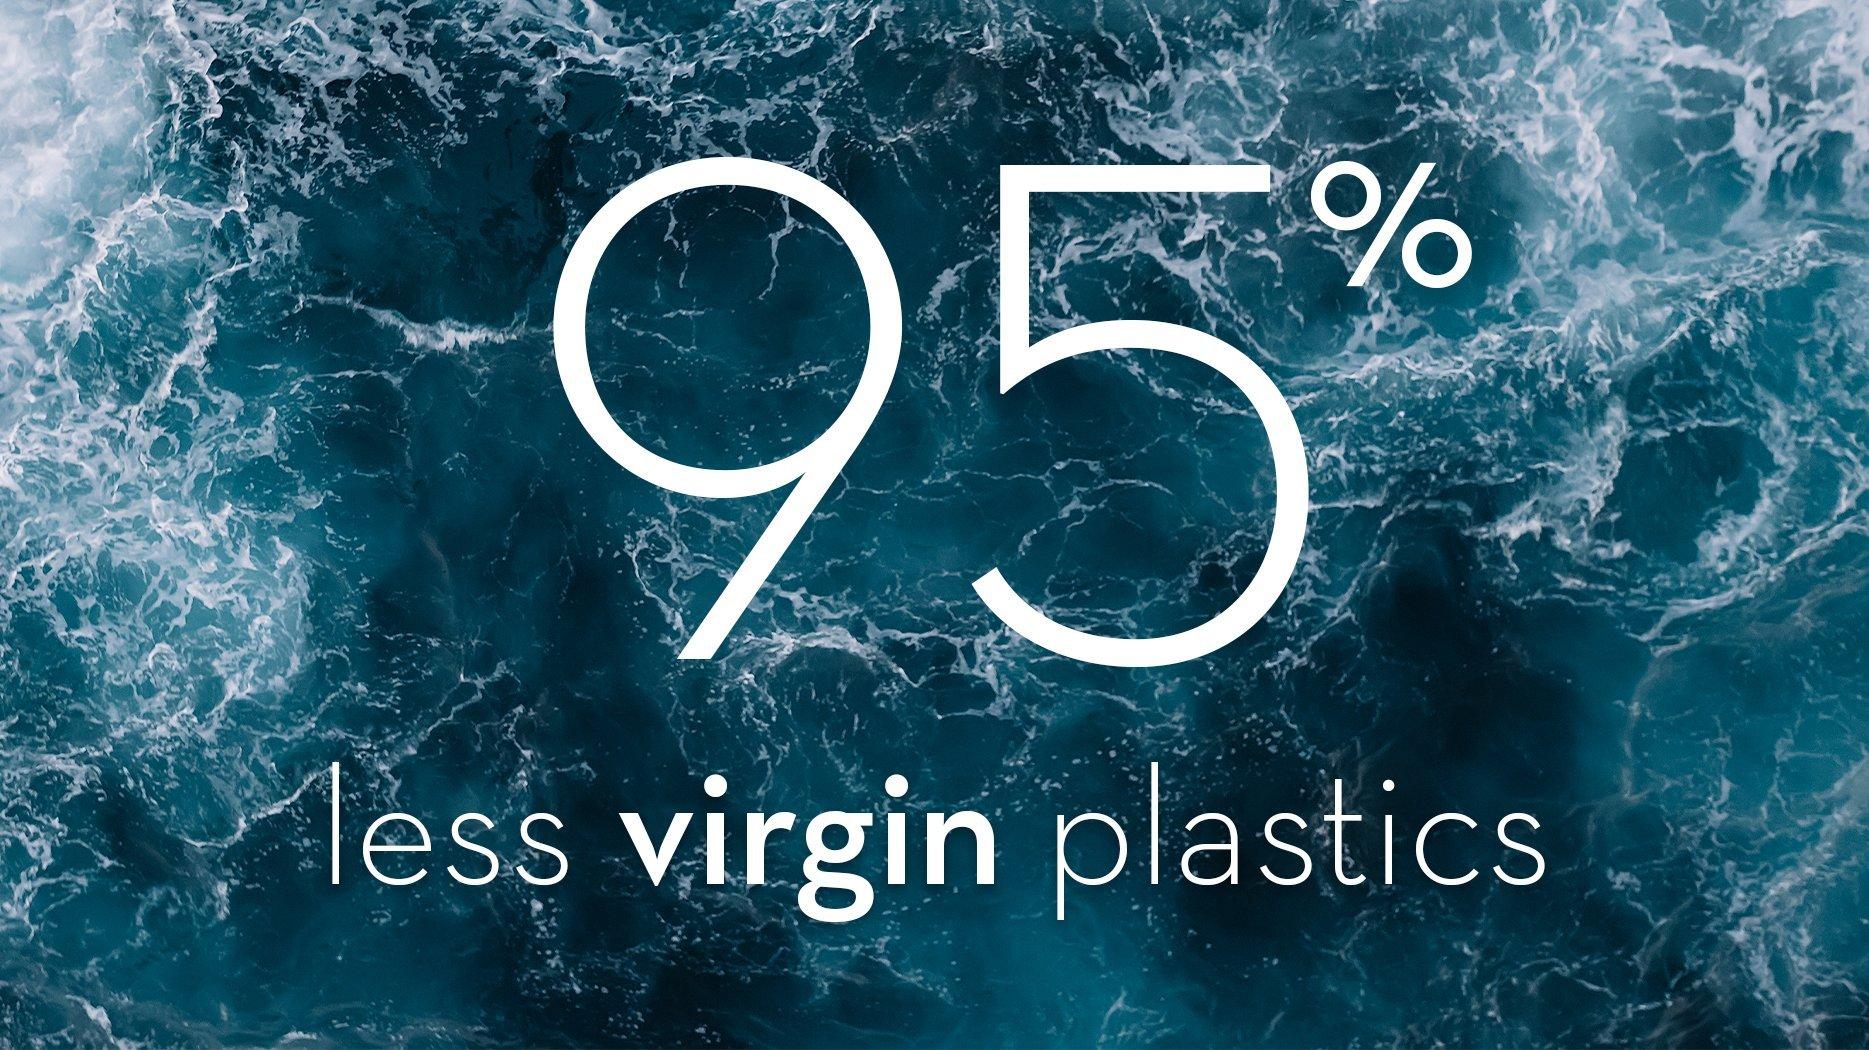 CATRICE Sustainability and Social Responsibility Plastics For Change Virgin Plastics